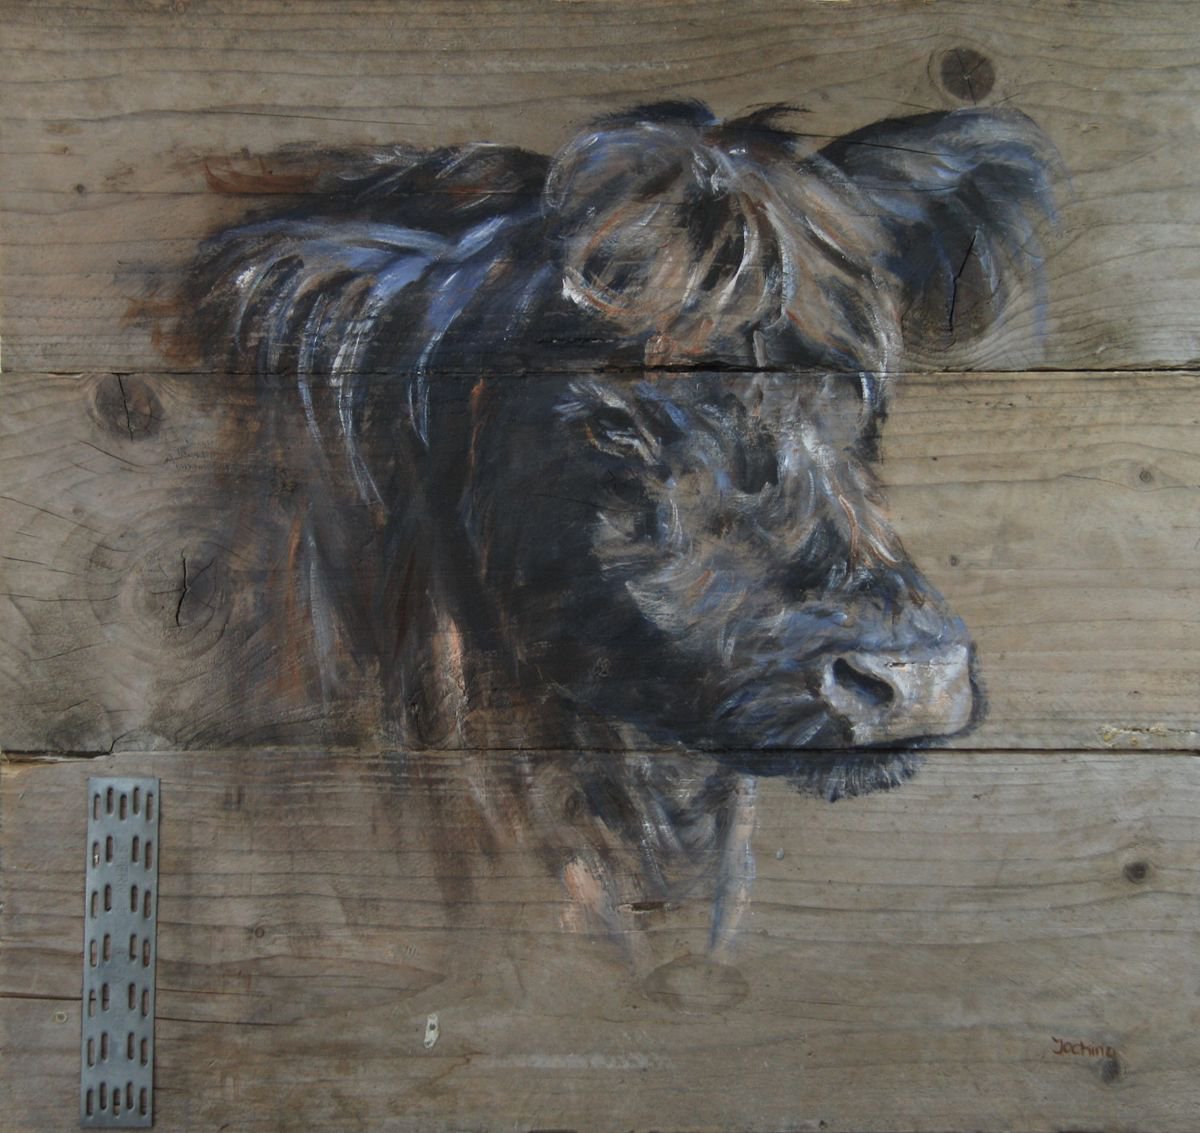 Cow by Jochina van Kruistum